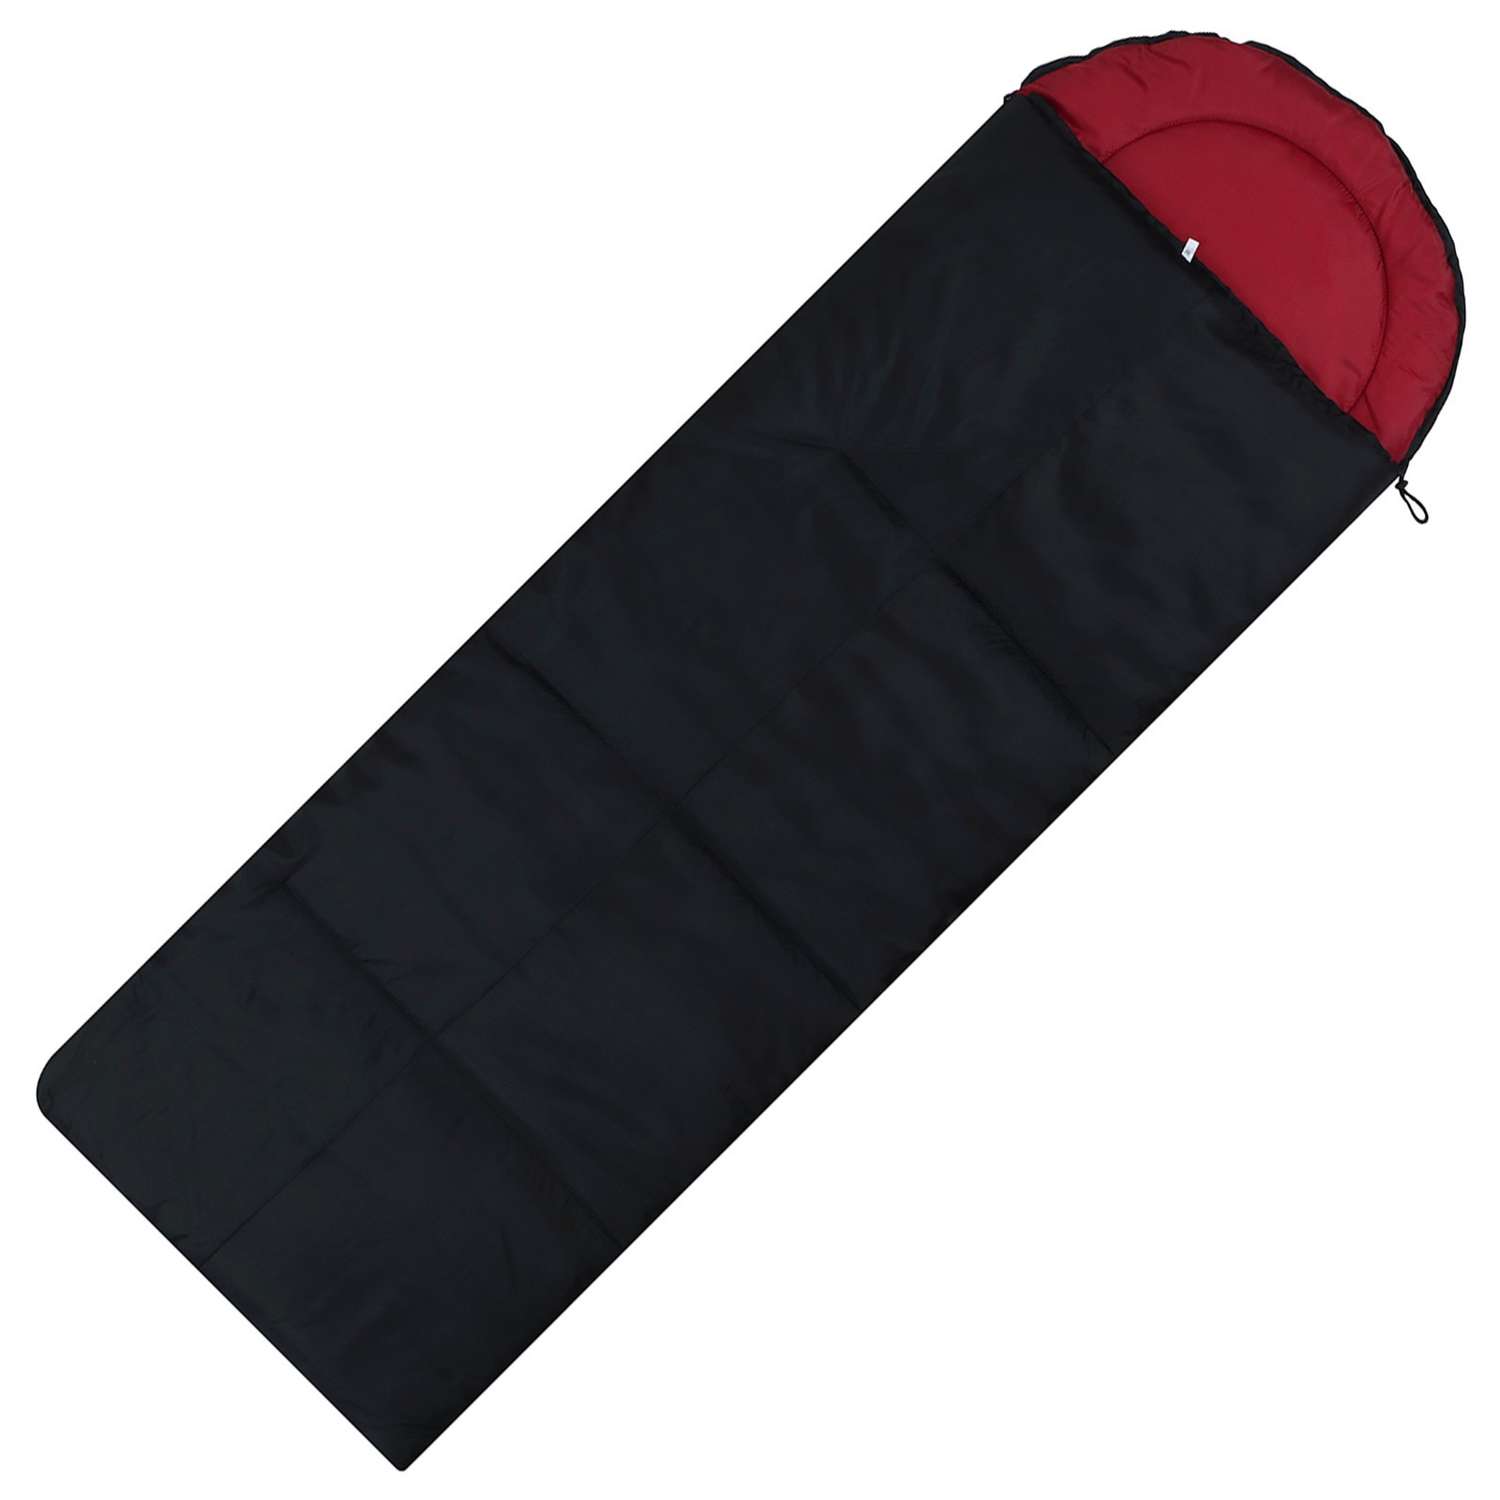 Спальник-одеяло Maclay с подголовником 235х80 см до -15°С - фото 2